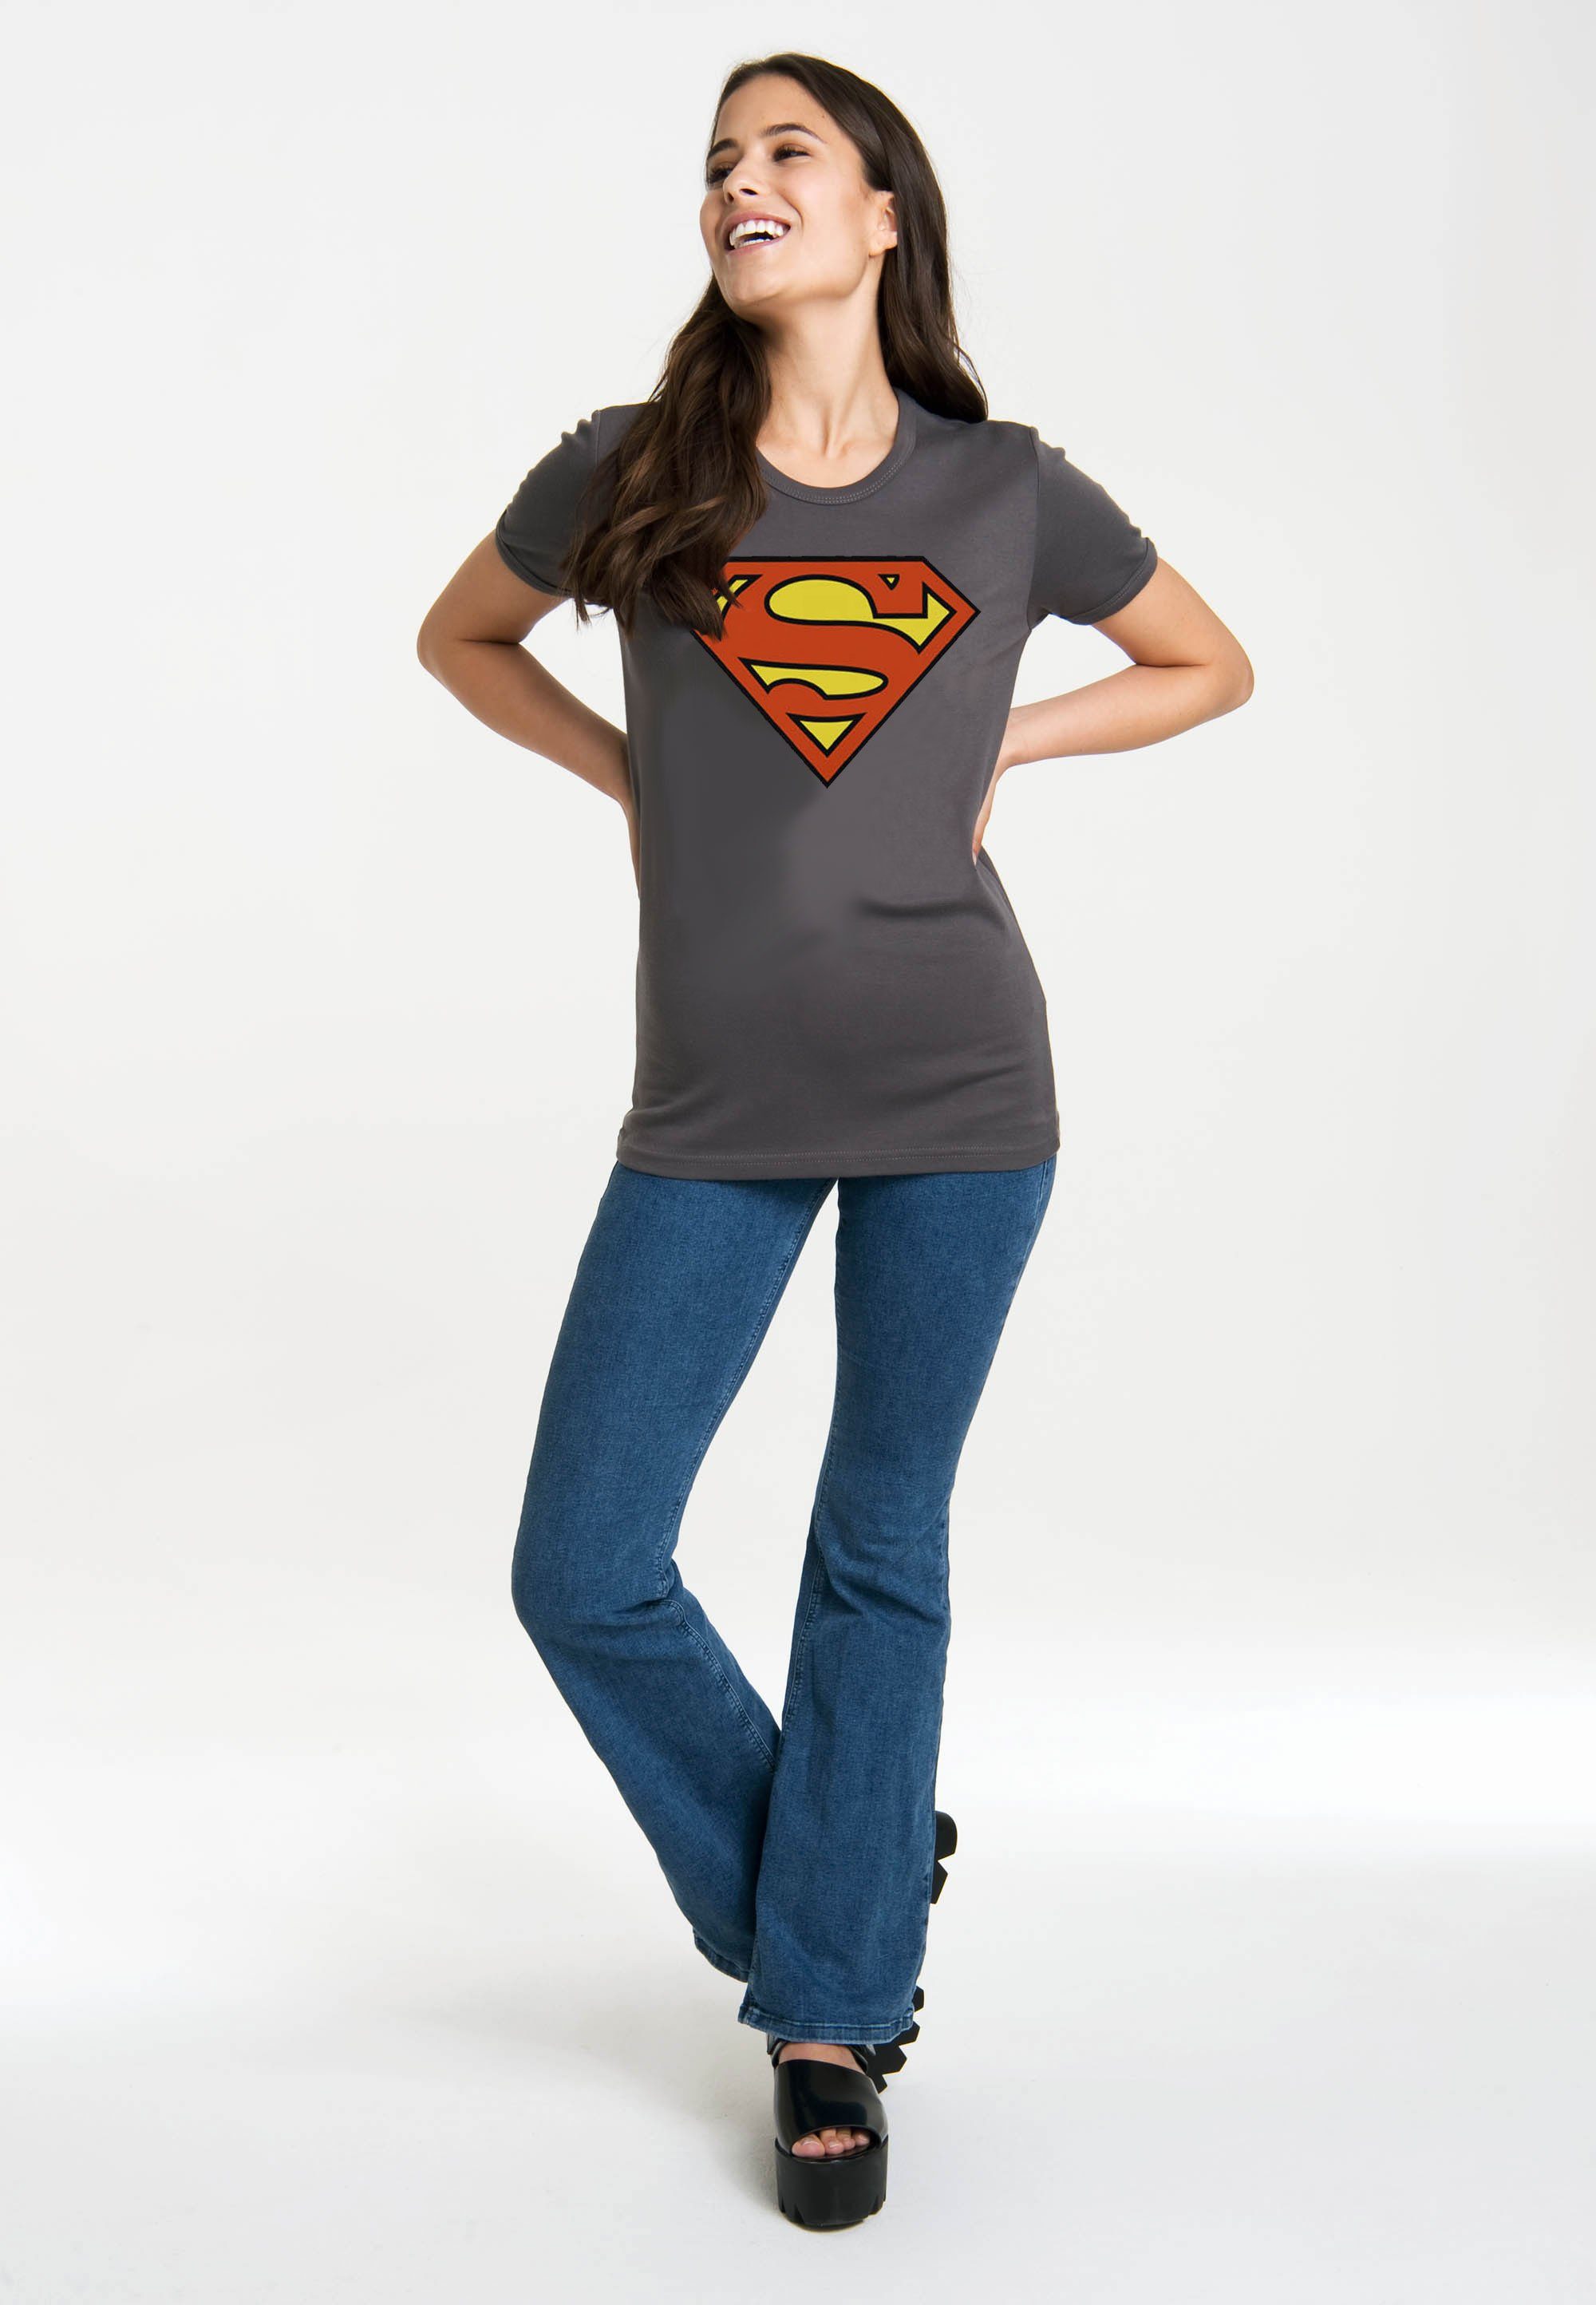 LOGOSHIRT T-Shirt Superman Logo trendigem grau mit Superhelden-Print